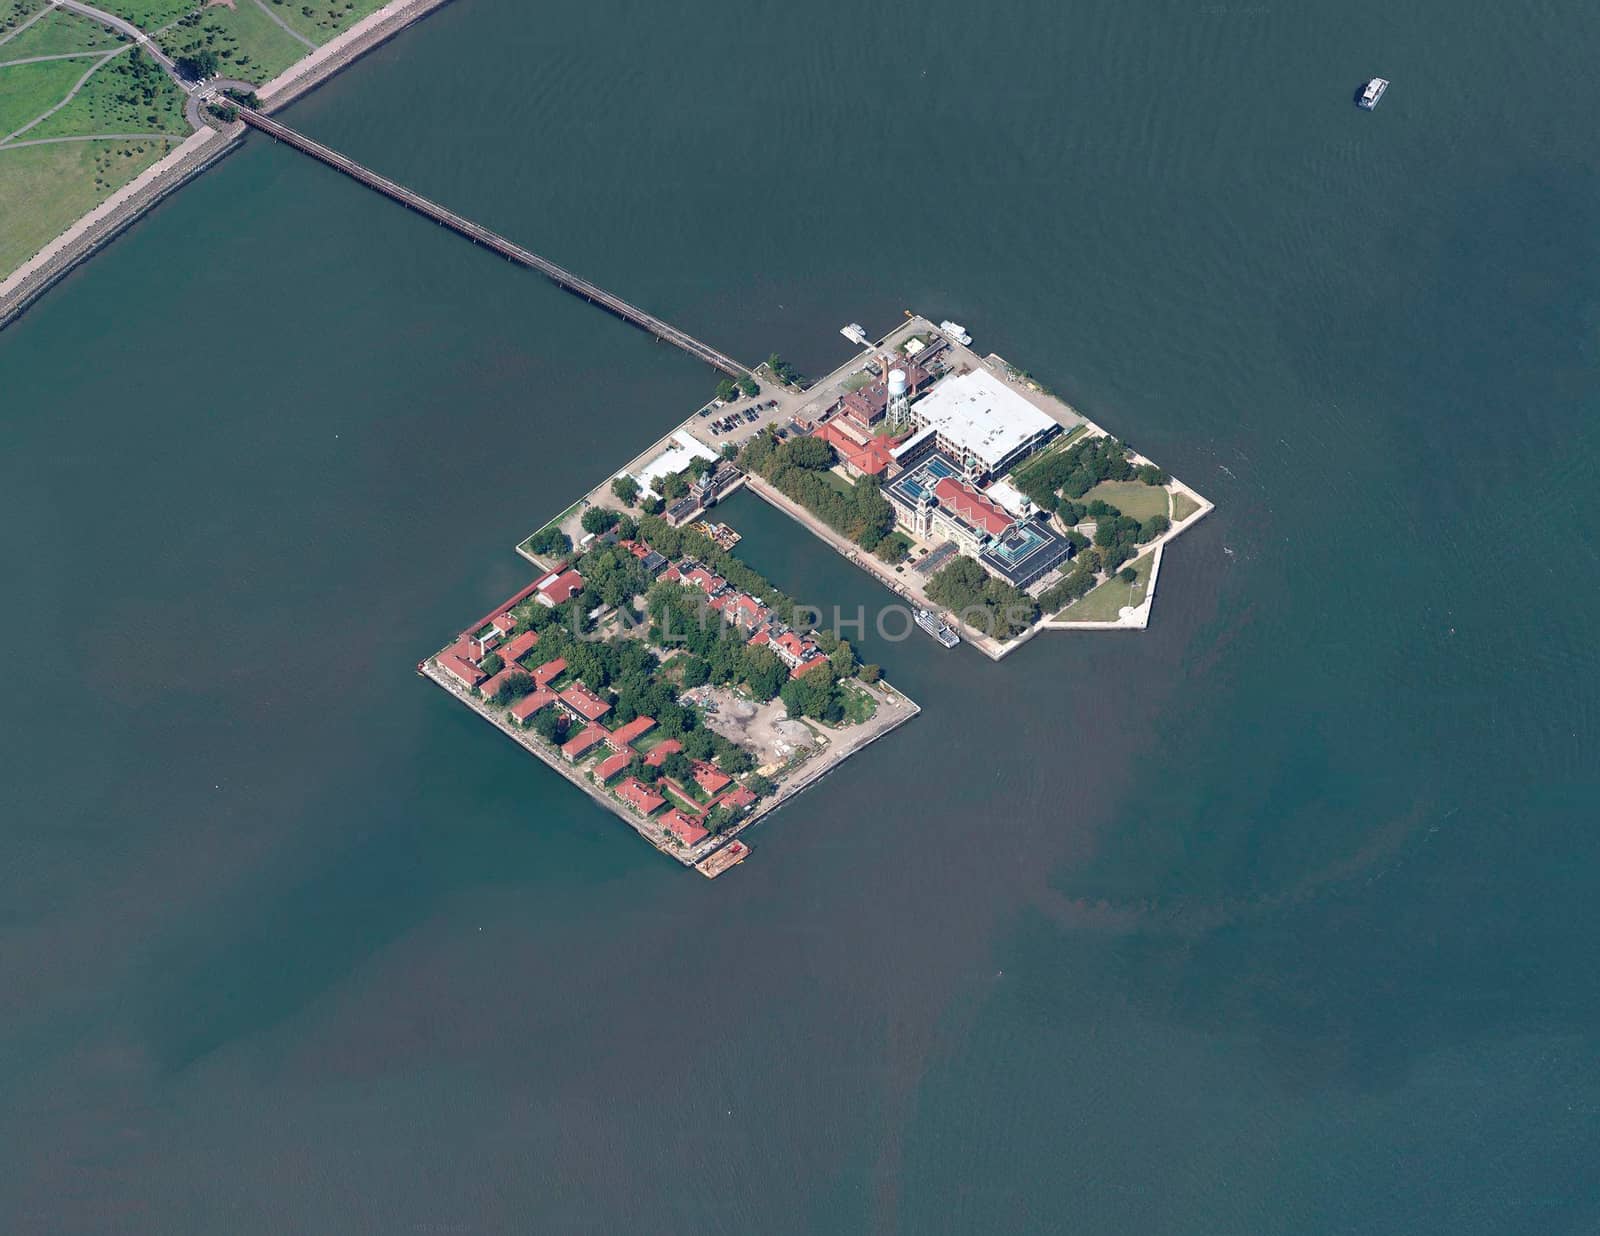 Ellis Island New York aerial view